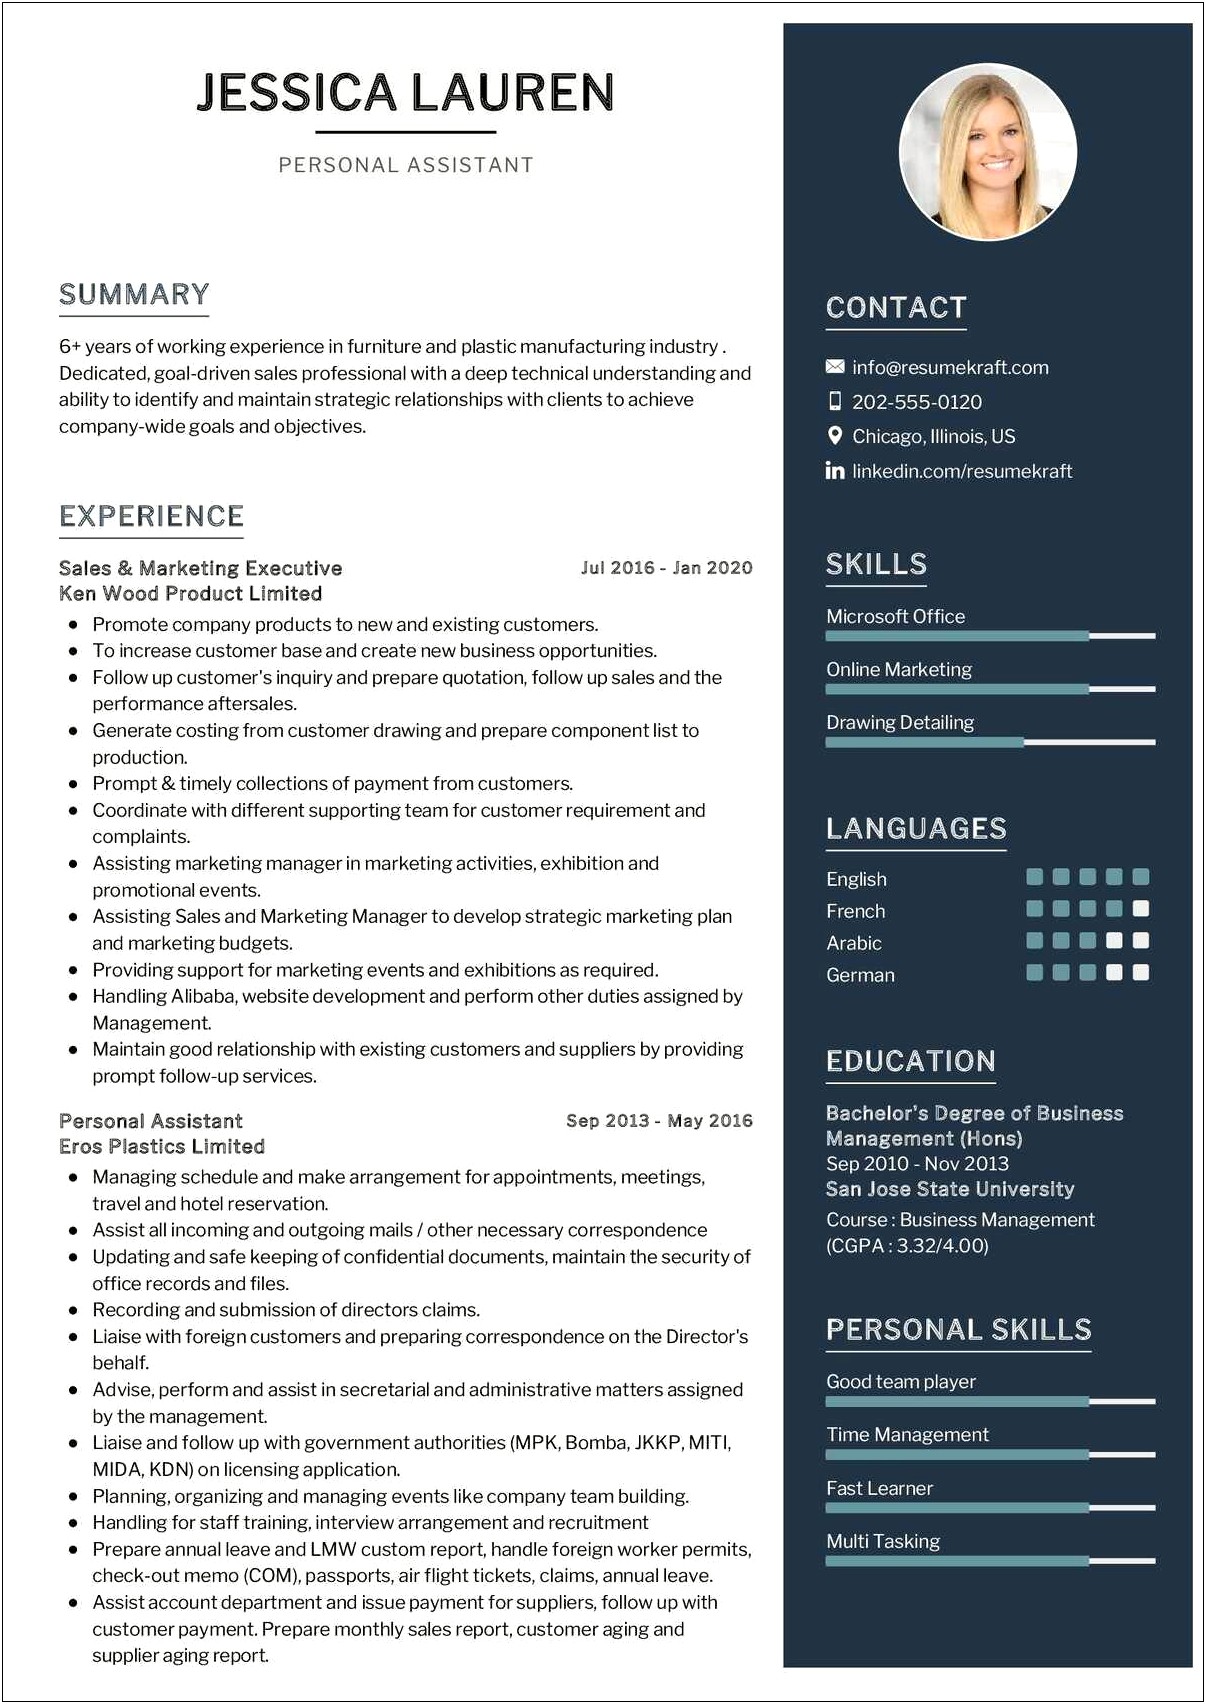 Job Description For Personal Care Assistant For Resume